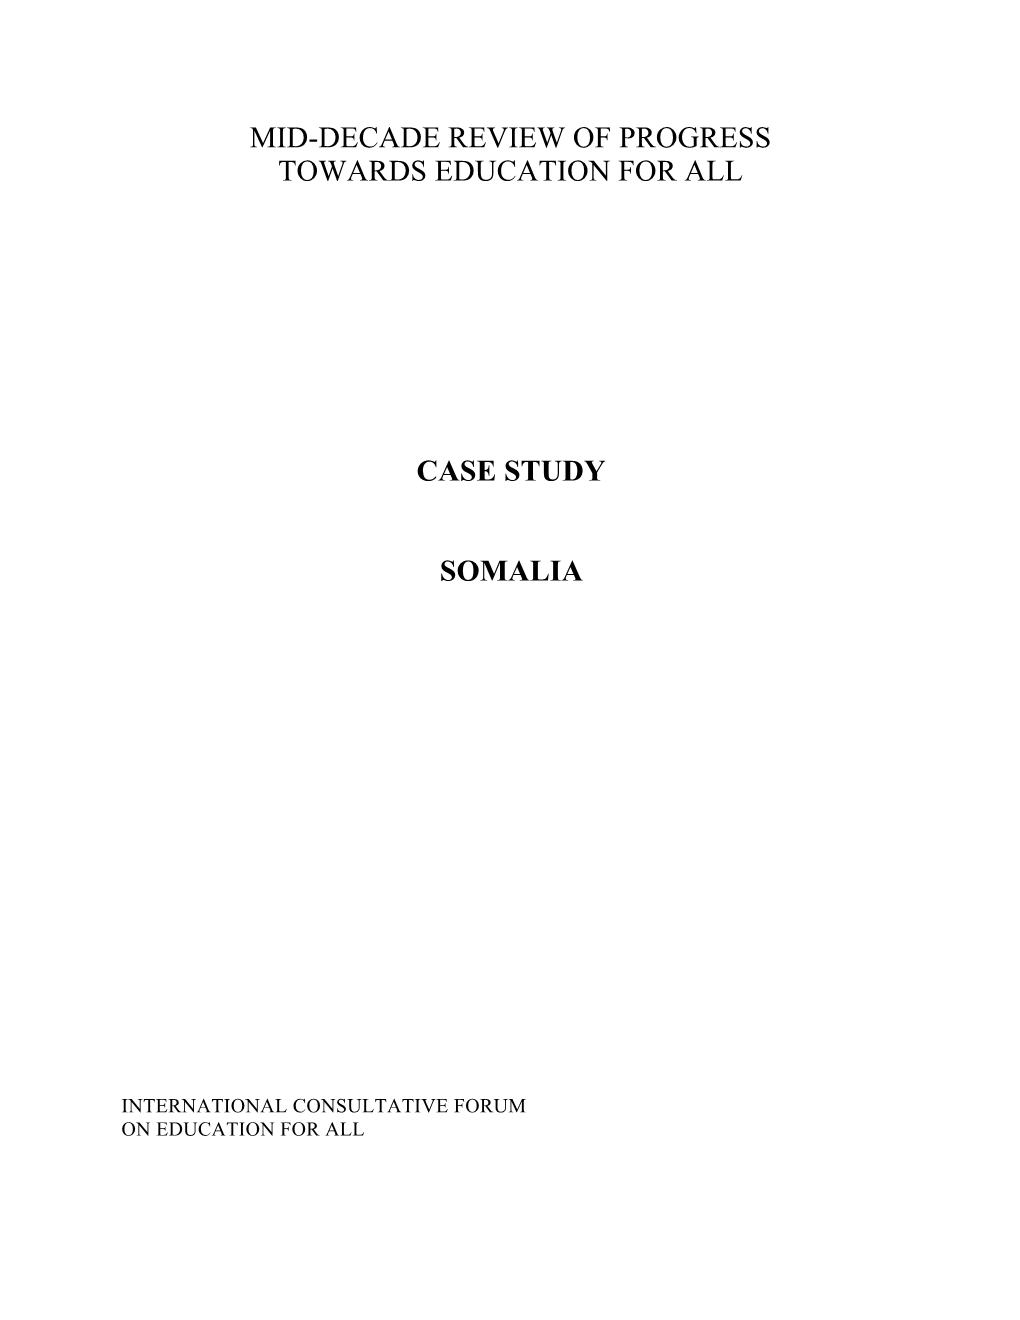 Mid-Decade Review of Progress Towards Education for All Case Study Somalia